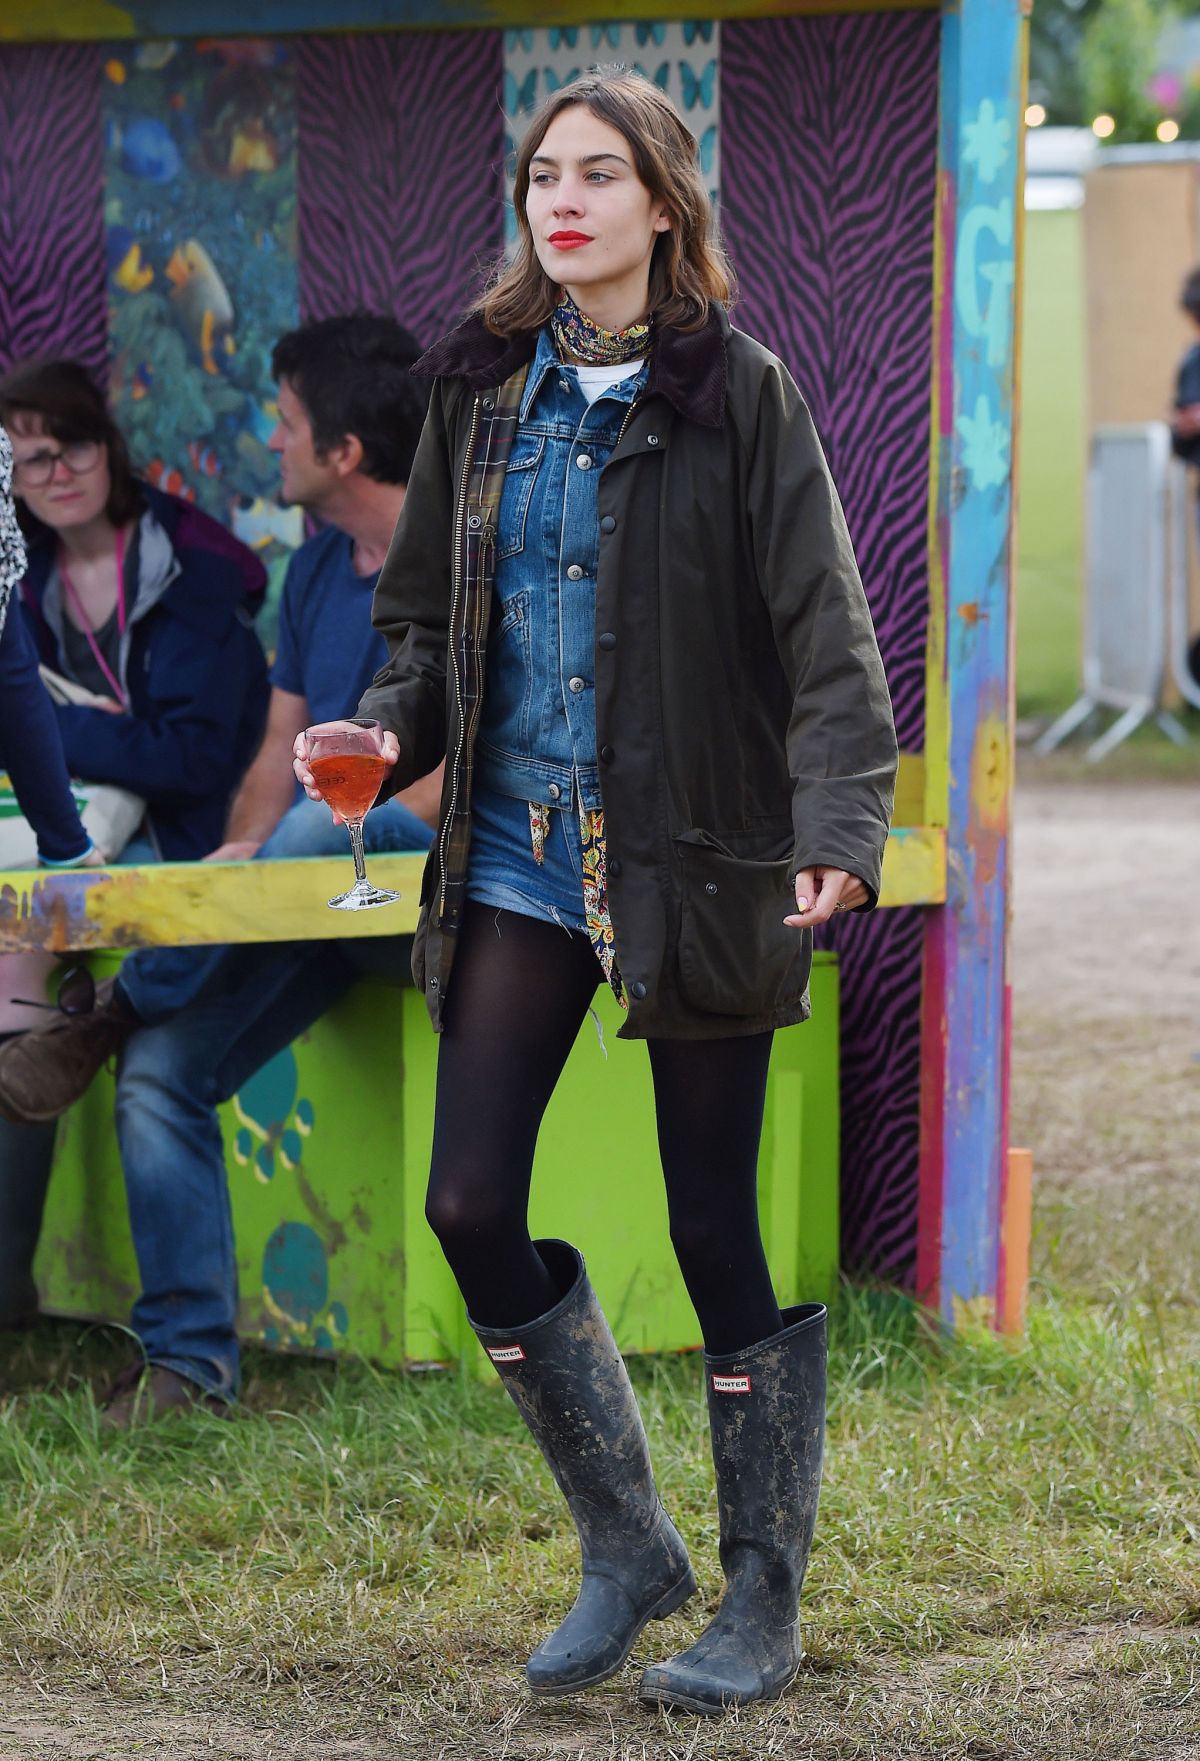 ALEXA CHUNG at Glastonbury Festival in Glastonbury, Day 3 - HawtCelebs